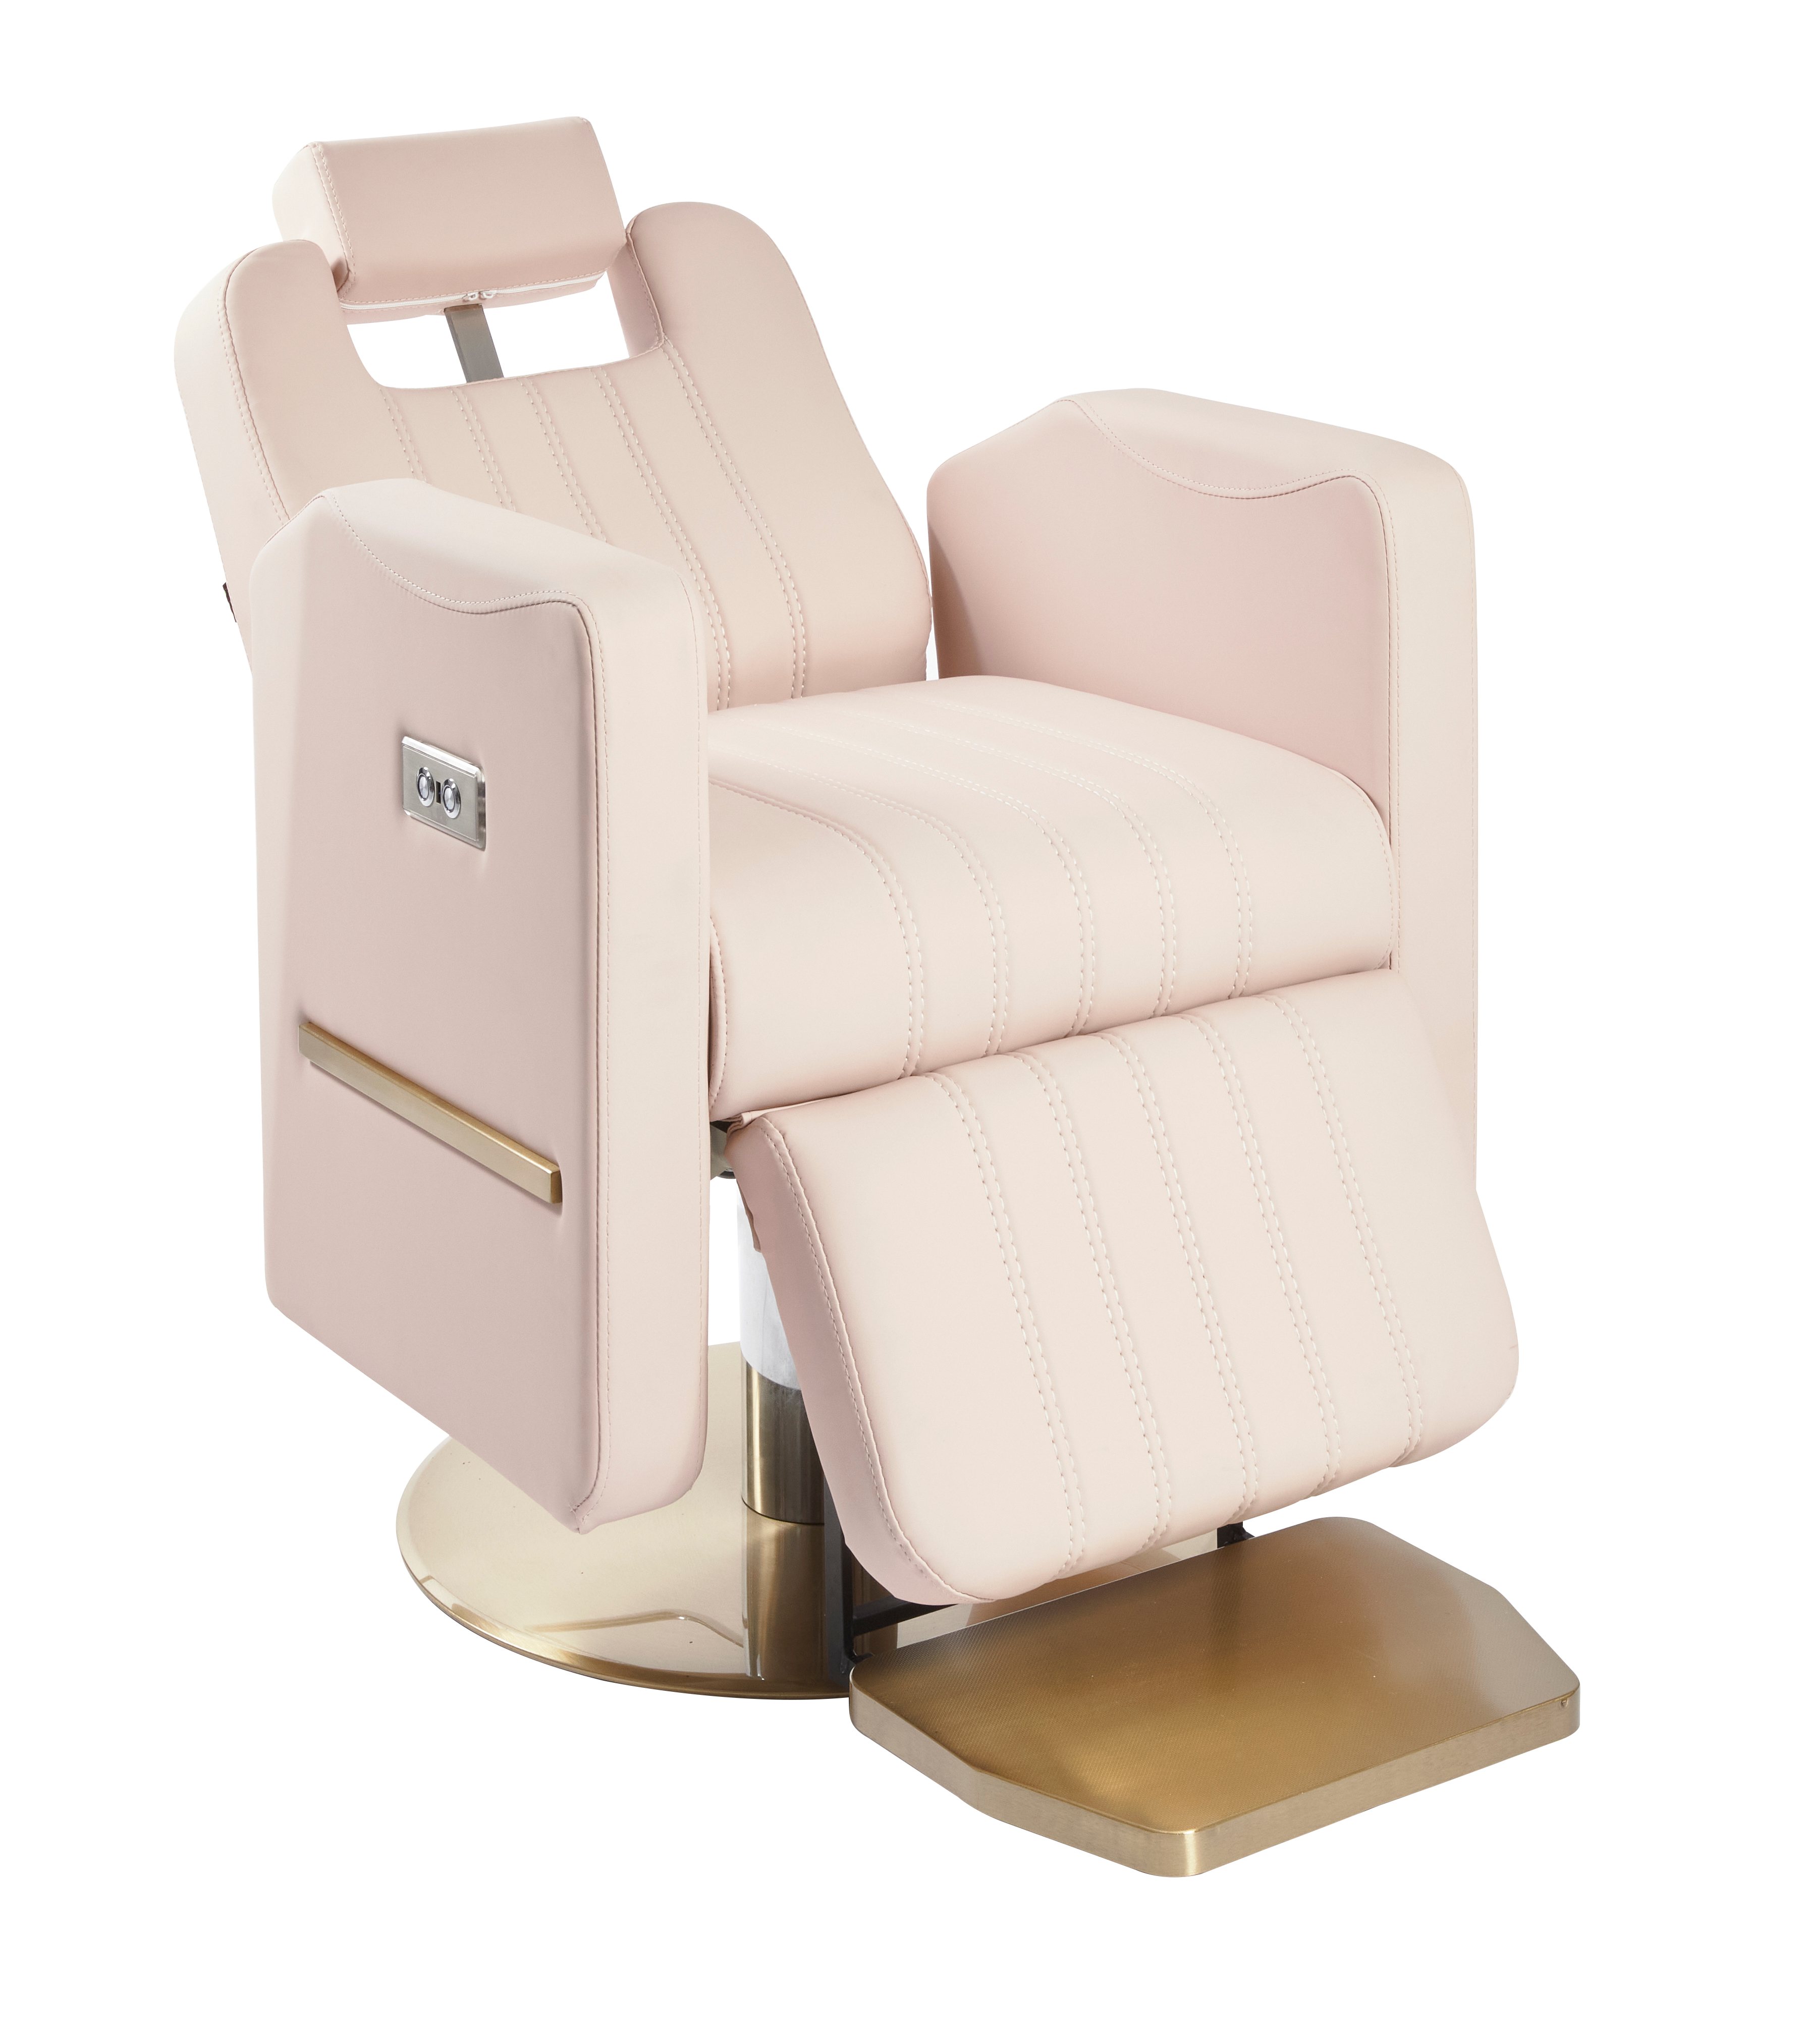 The Cherri Reclining Chair - Pink & Gold By SEC